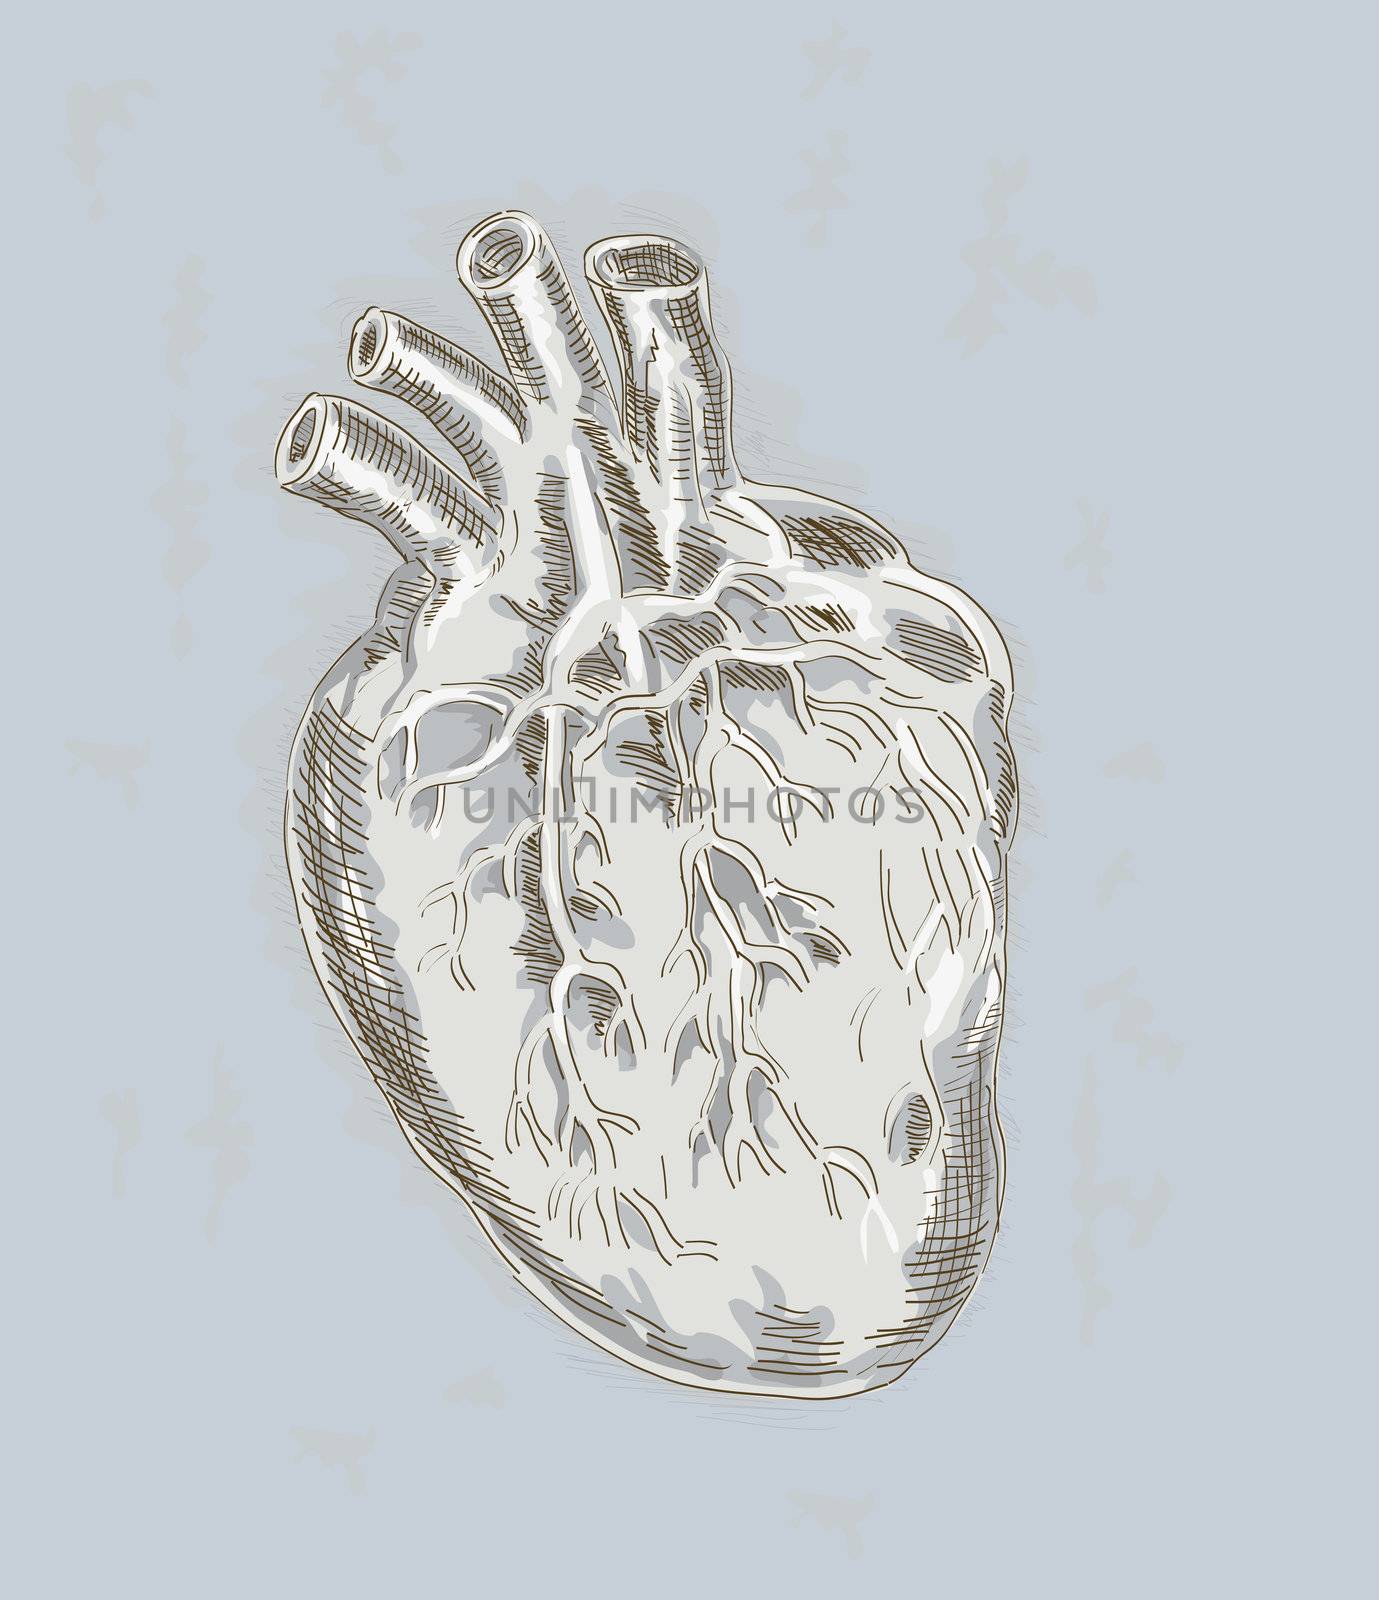 Human heart anatomy by patrimonio